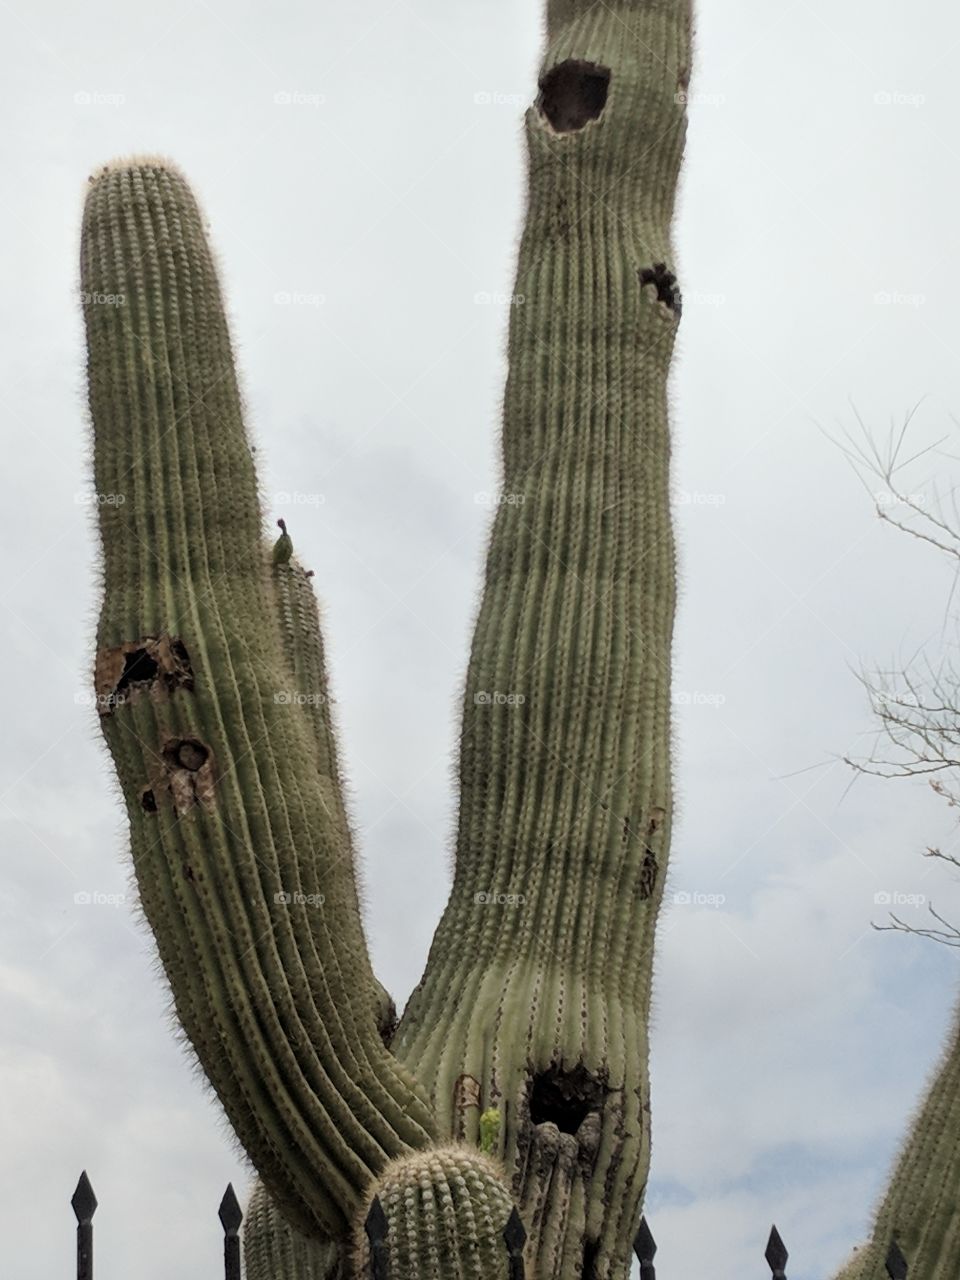 Saguaro cactus with bird nest